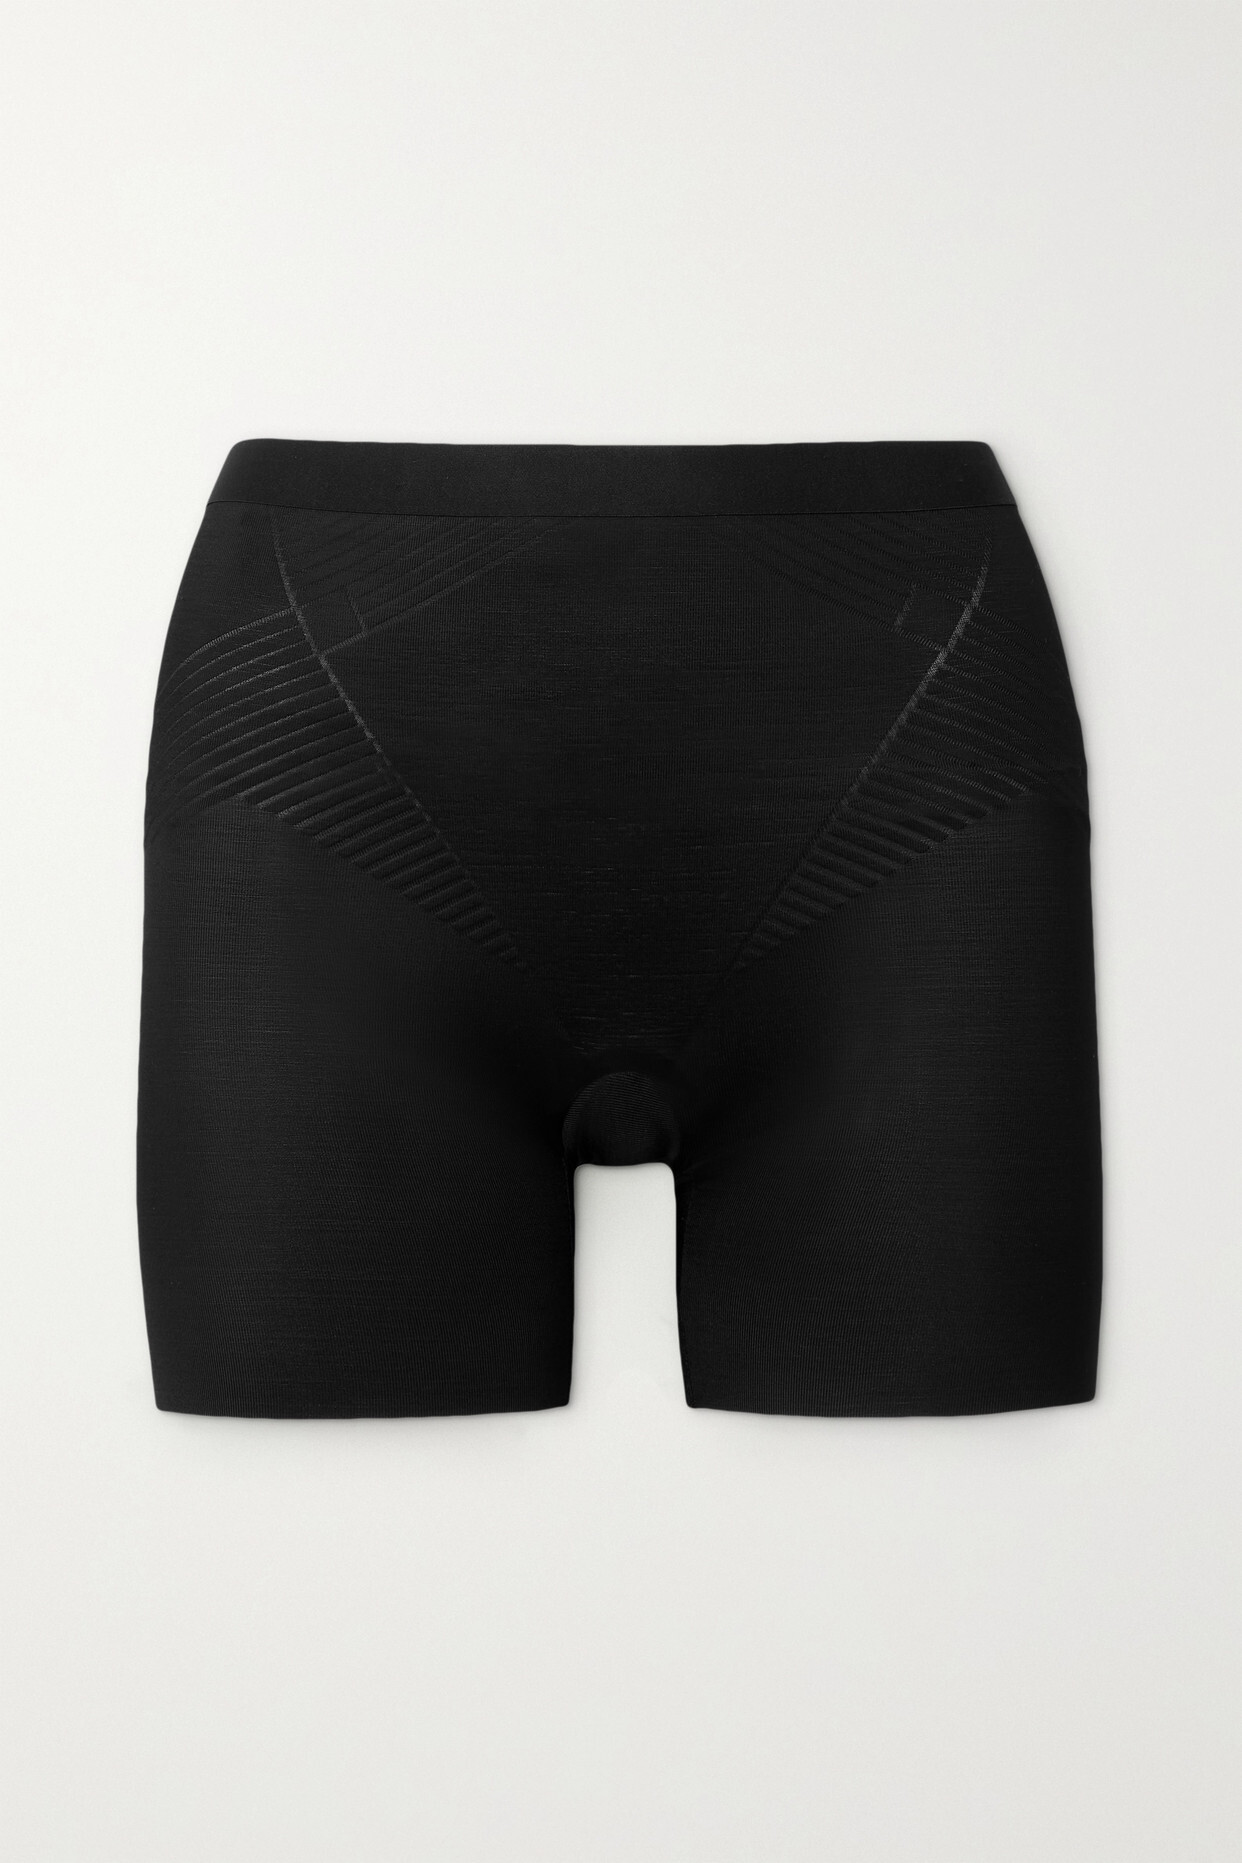 Spanx - Thinstincts 2.0 Shorts - Black